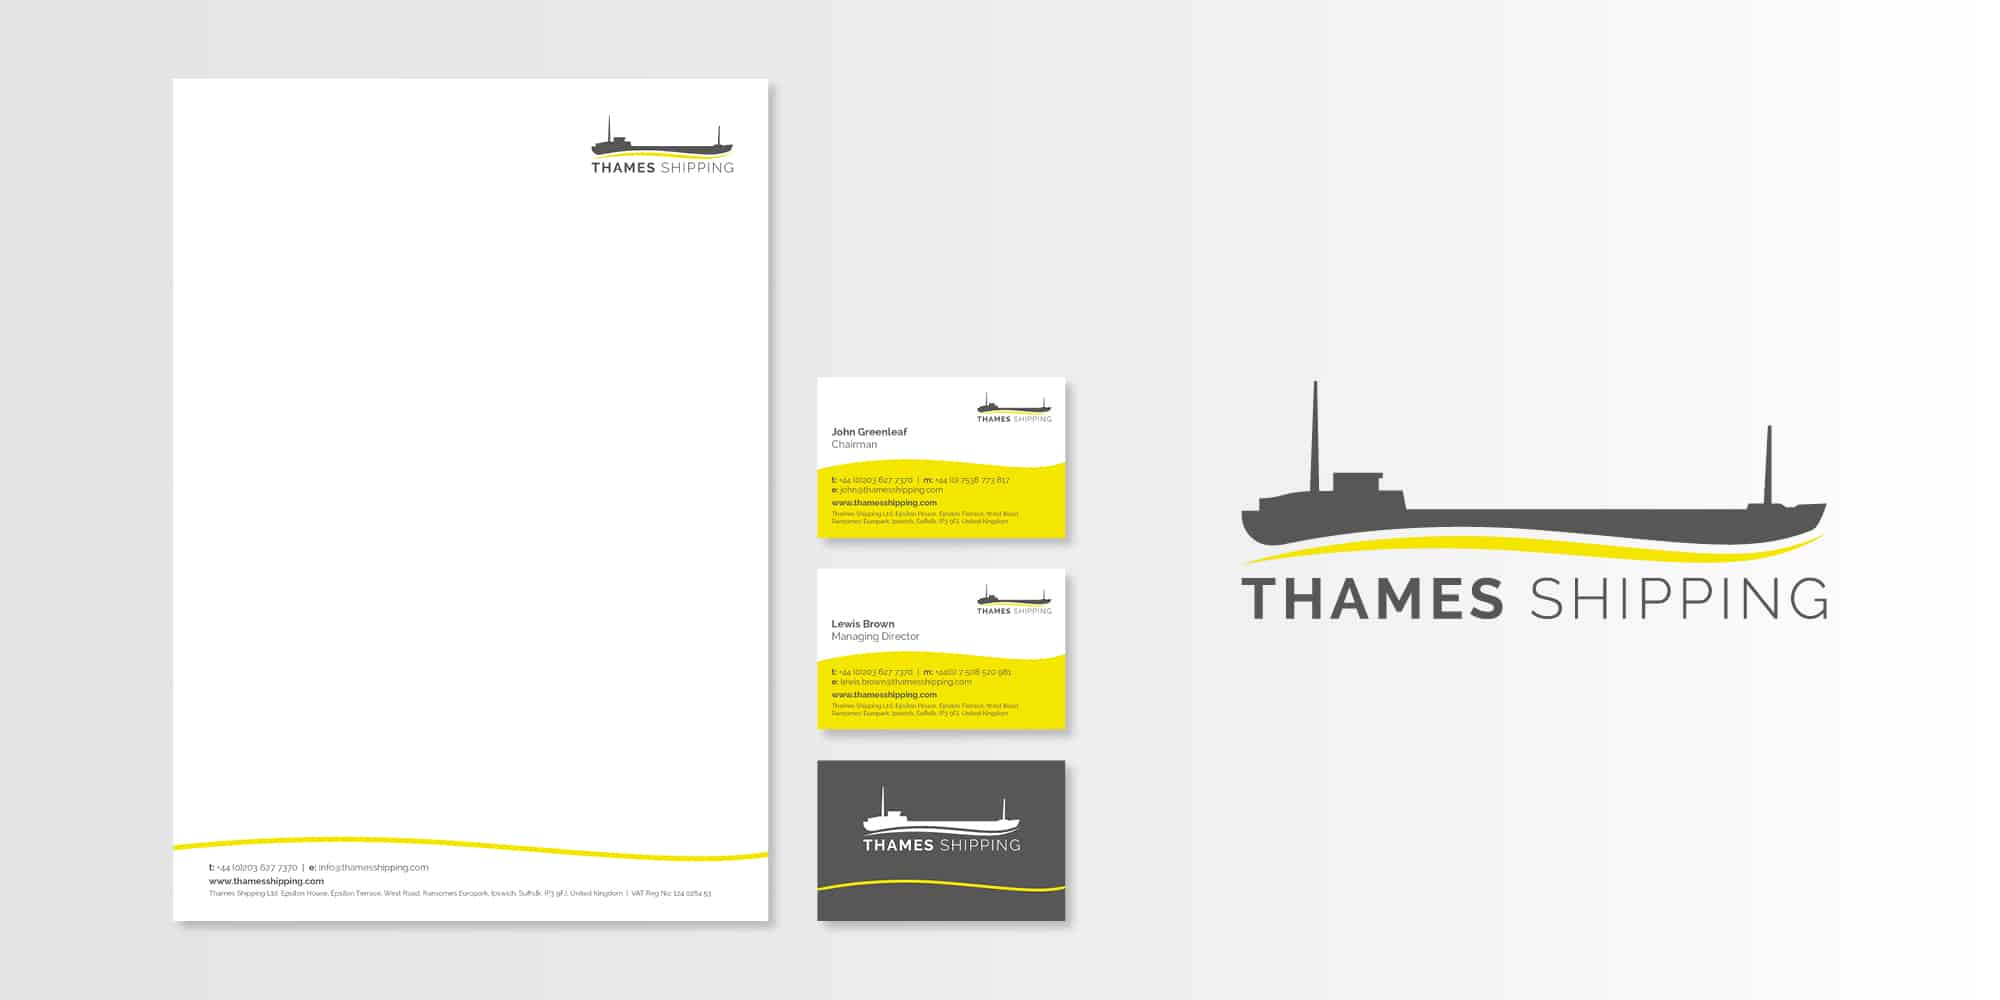 Thames Shipping - Stationery Mockup